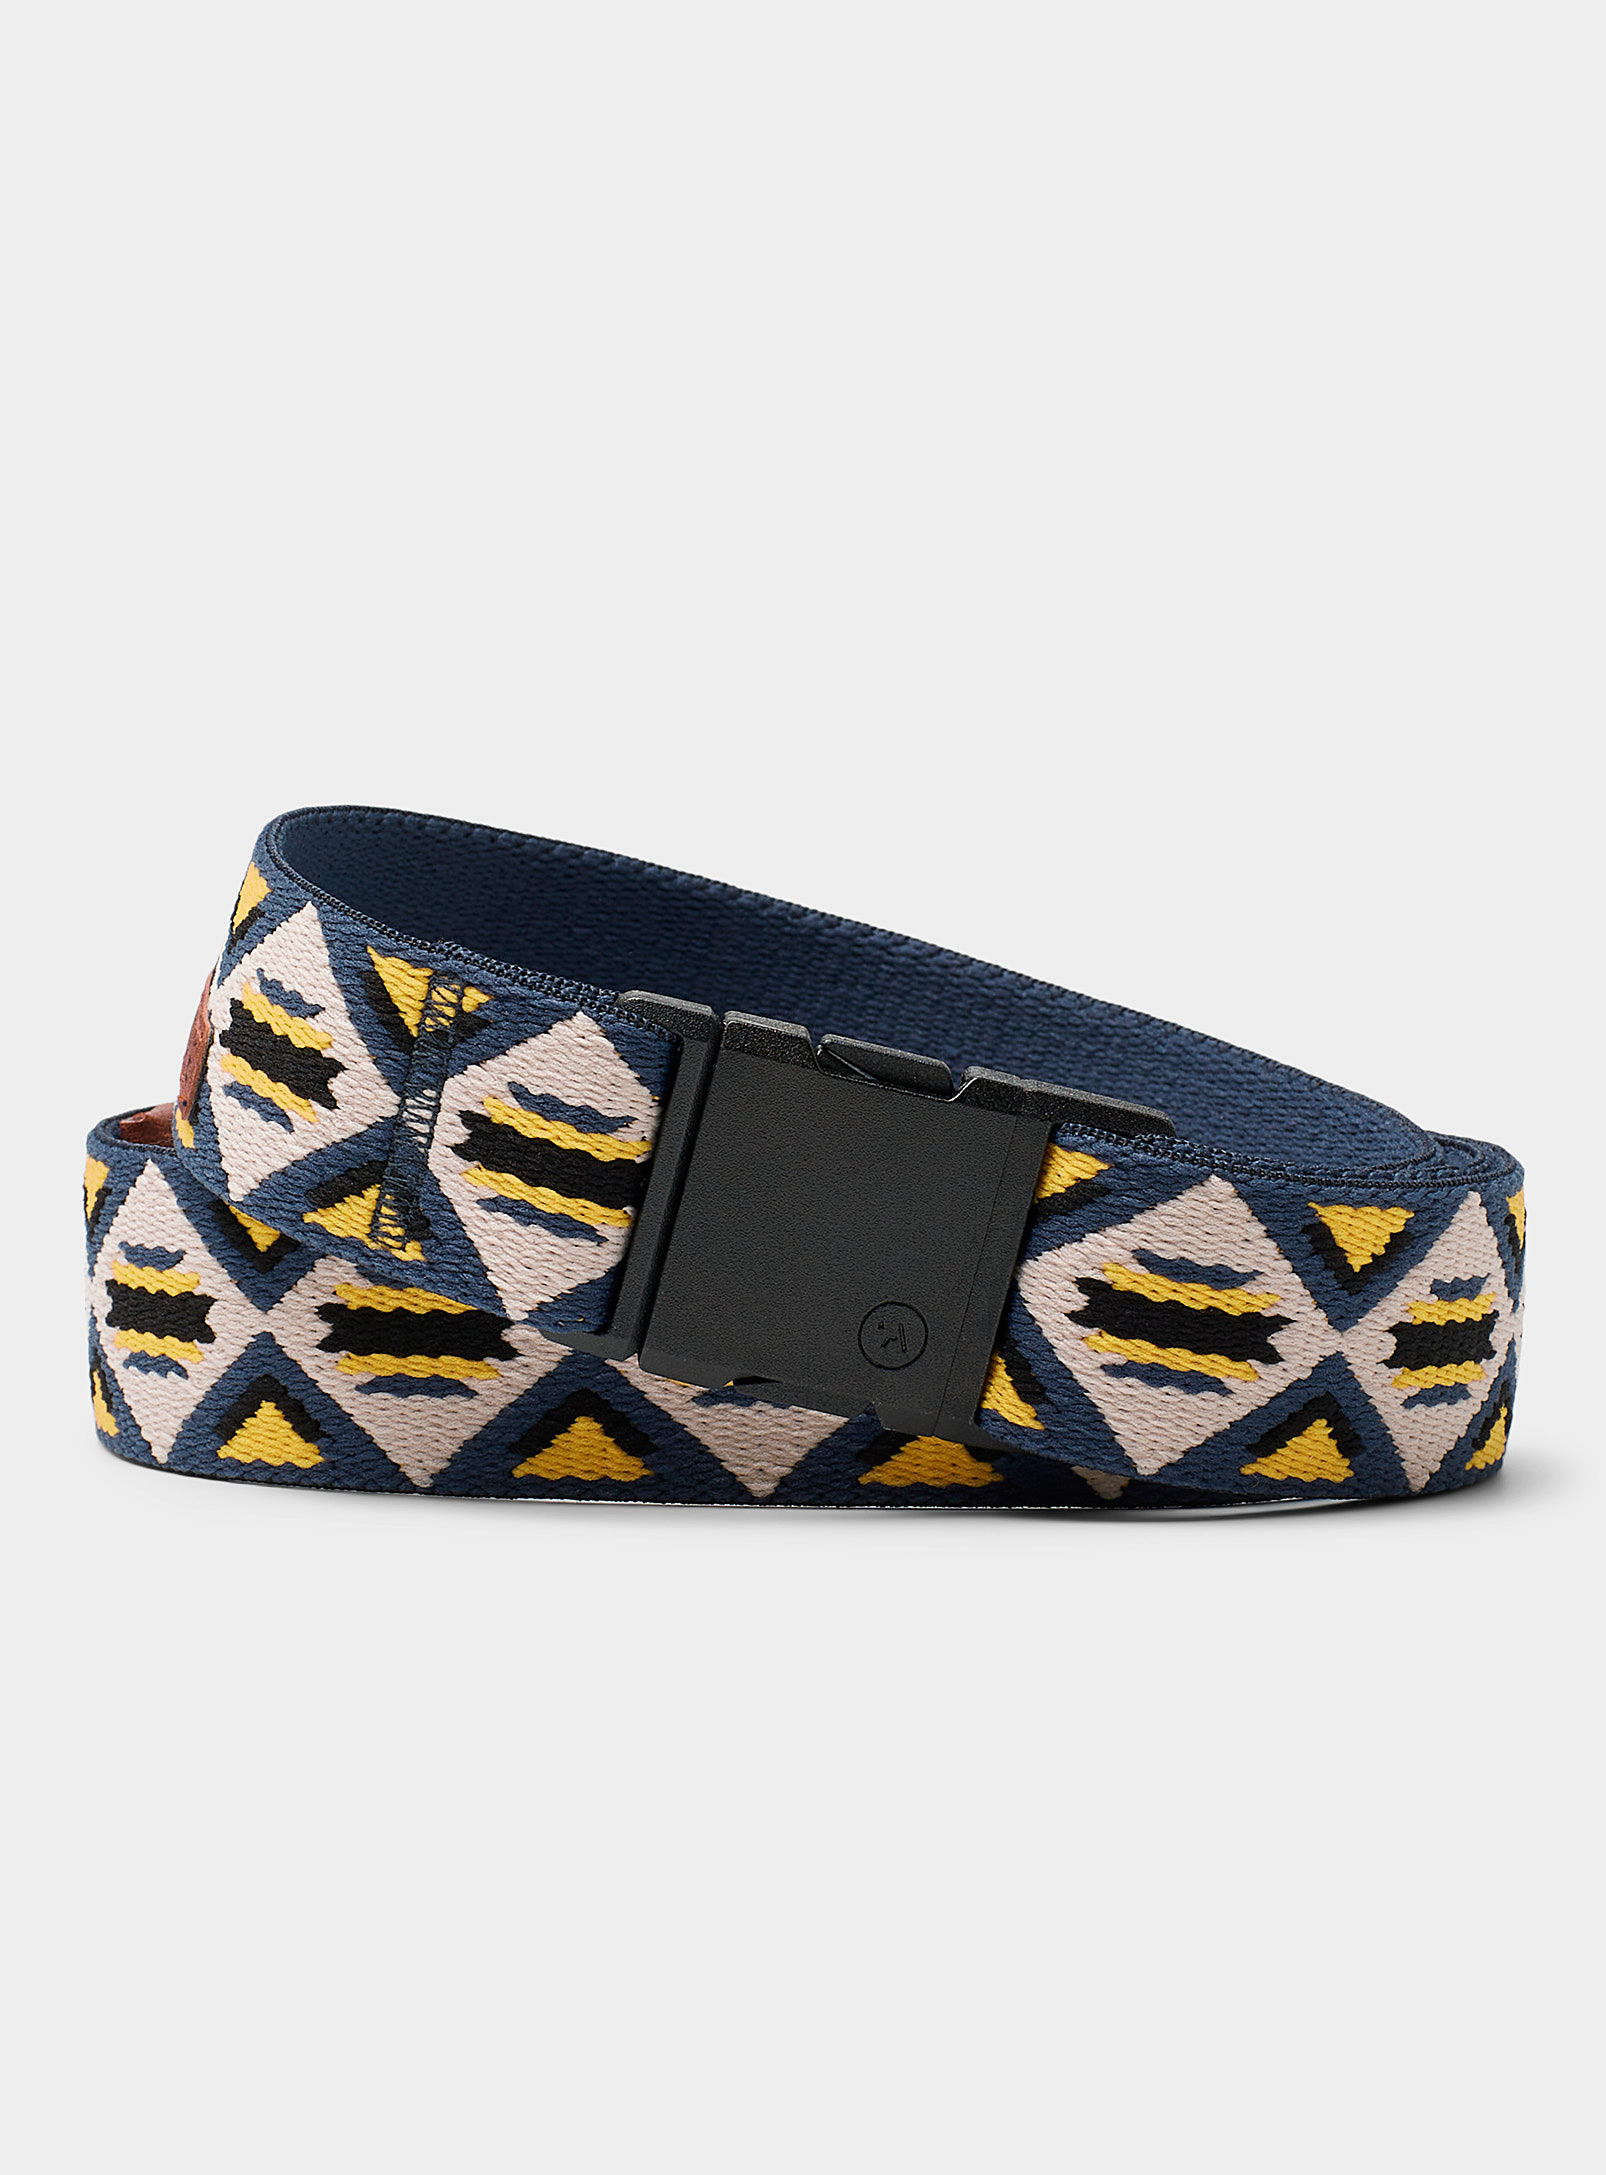 Arcade - Men's Colourful geo pattern woven belt